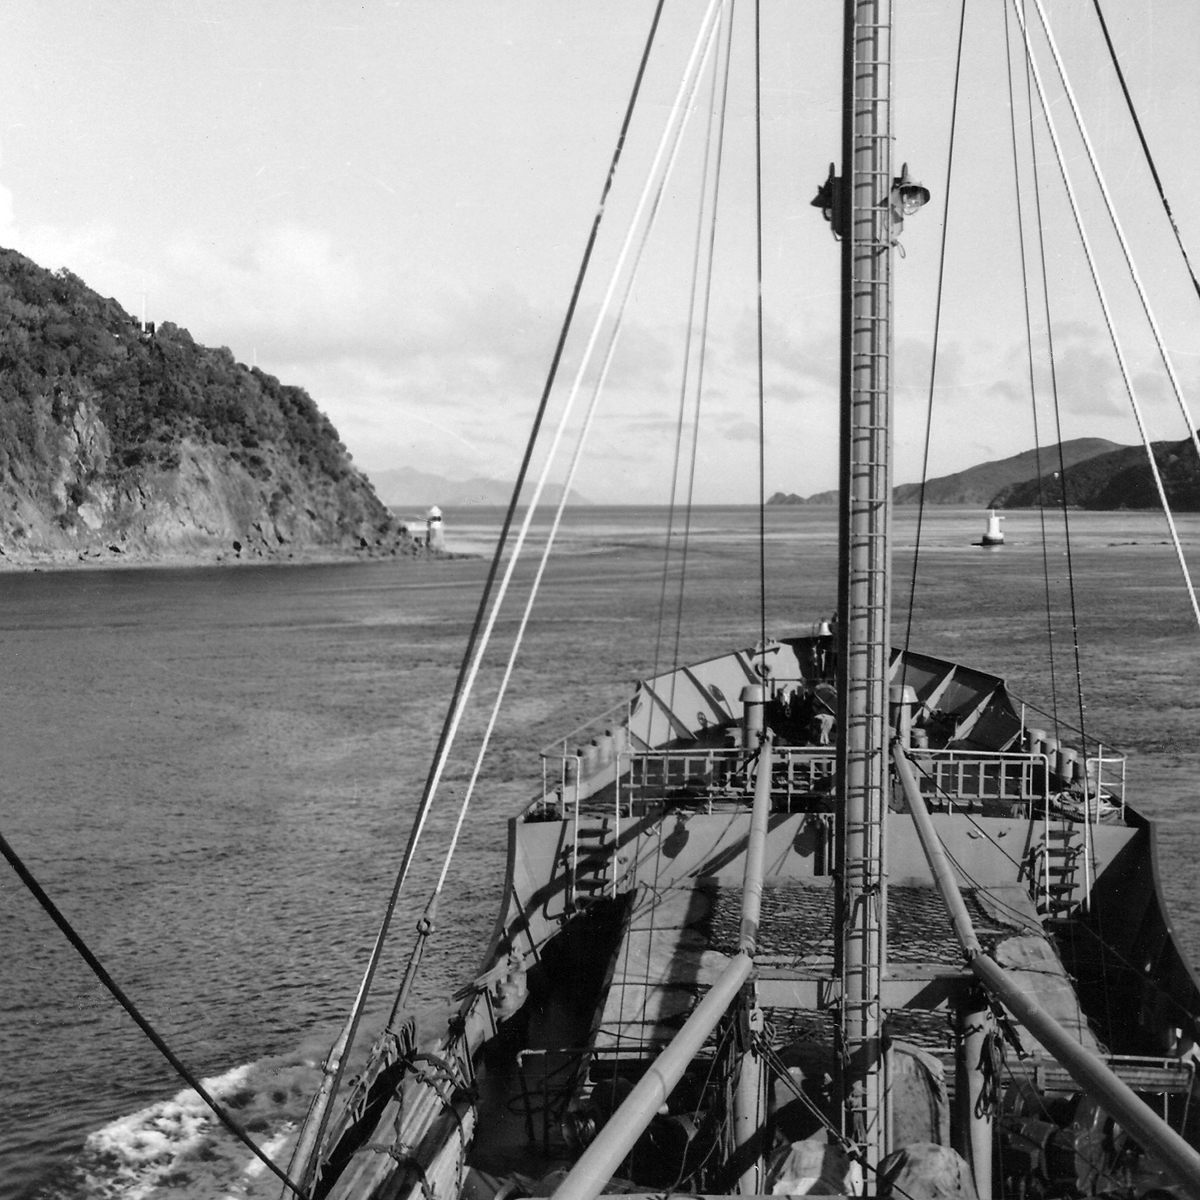 Alex's ship Maranui in French Pass NZ